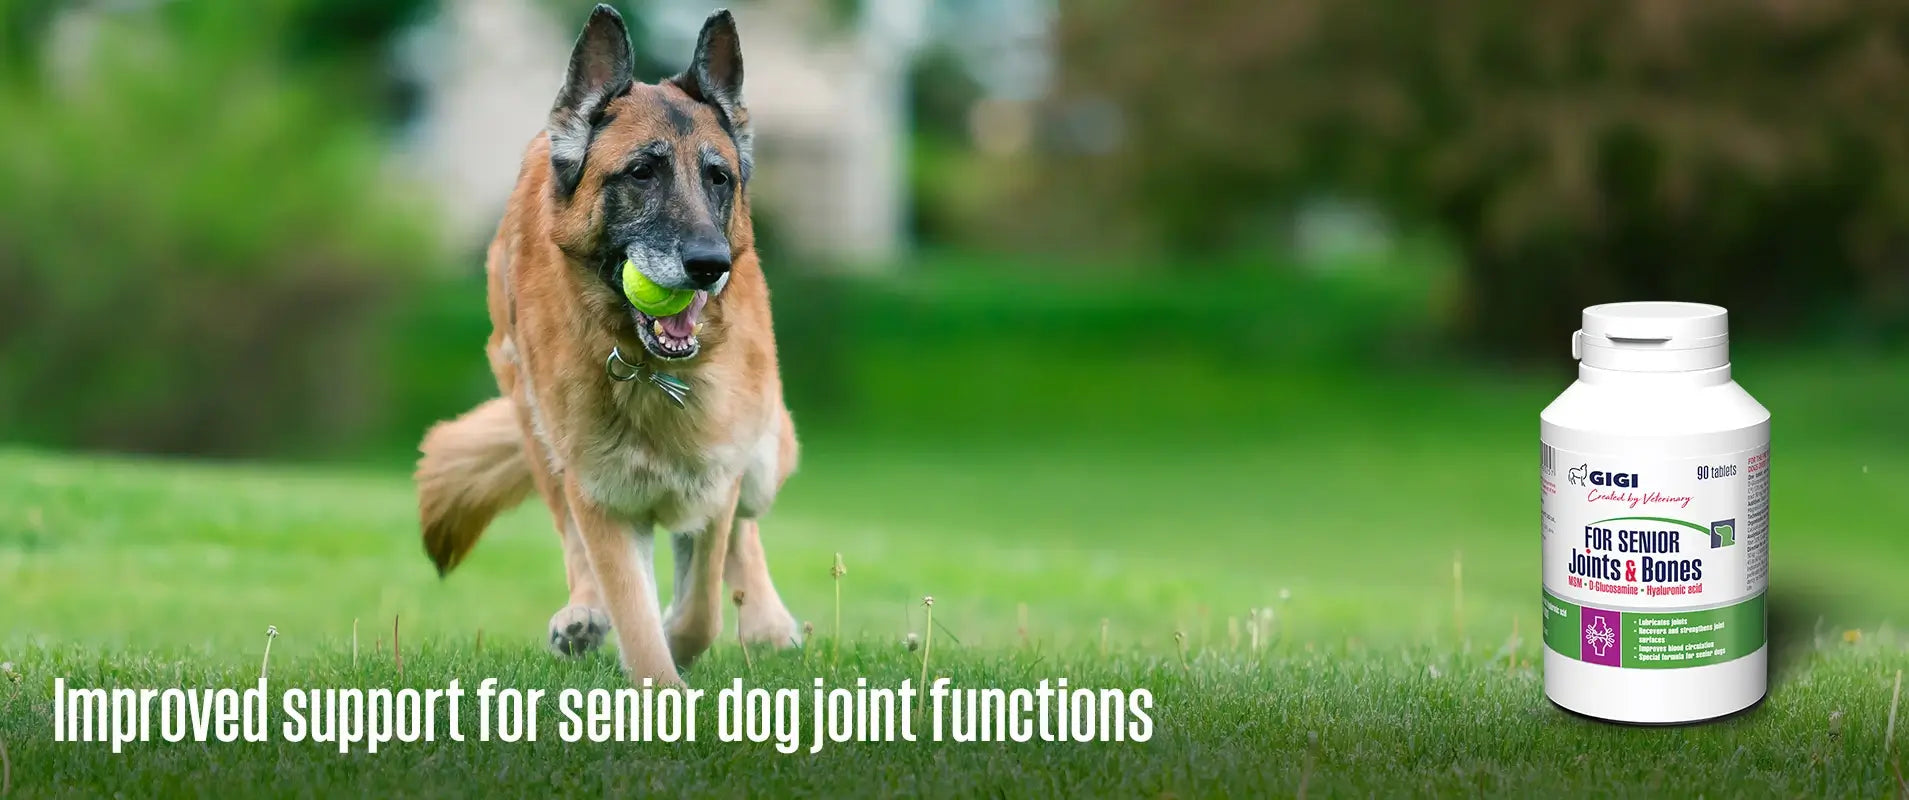 Joint supplement for senior dogs